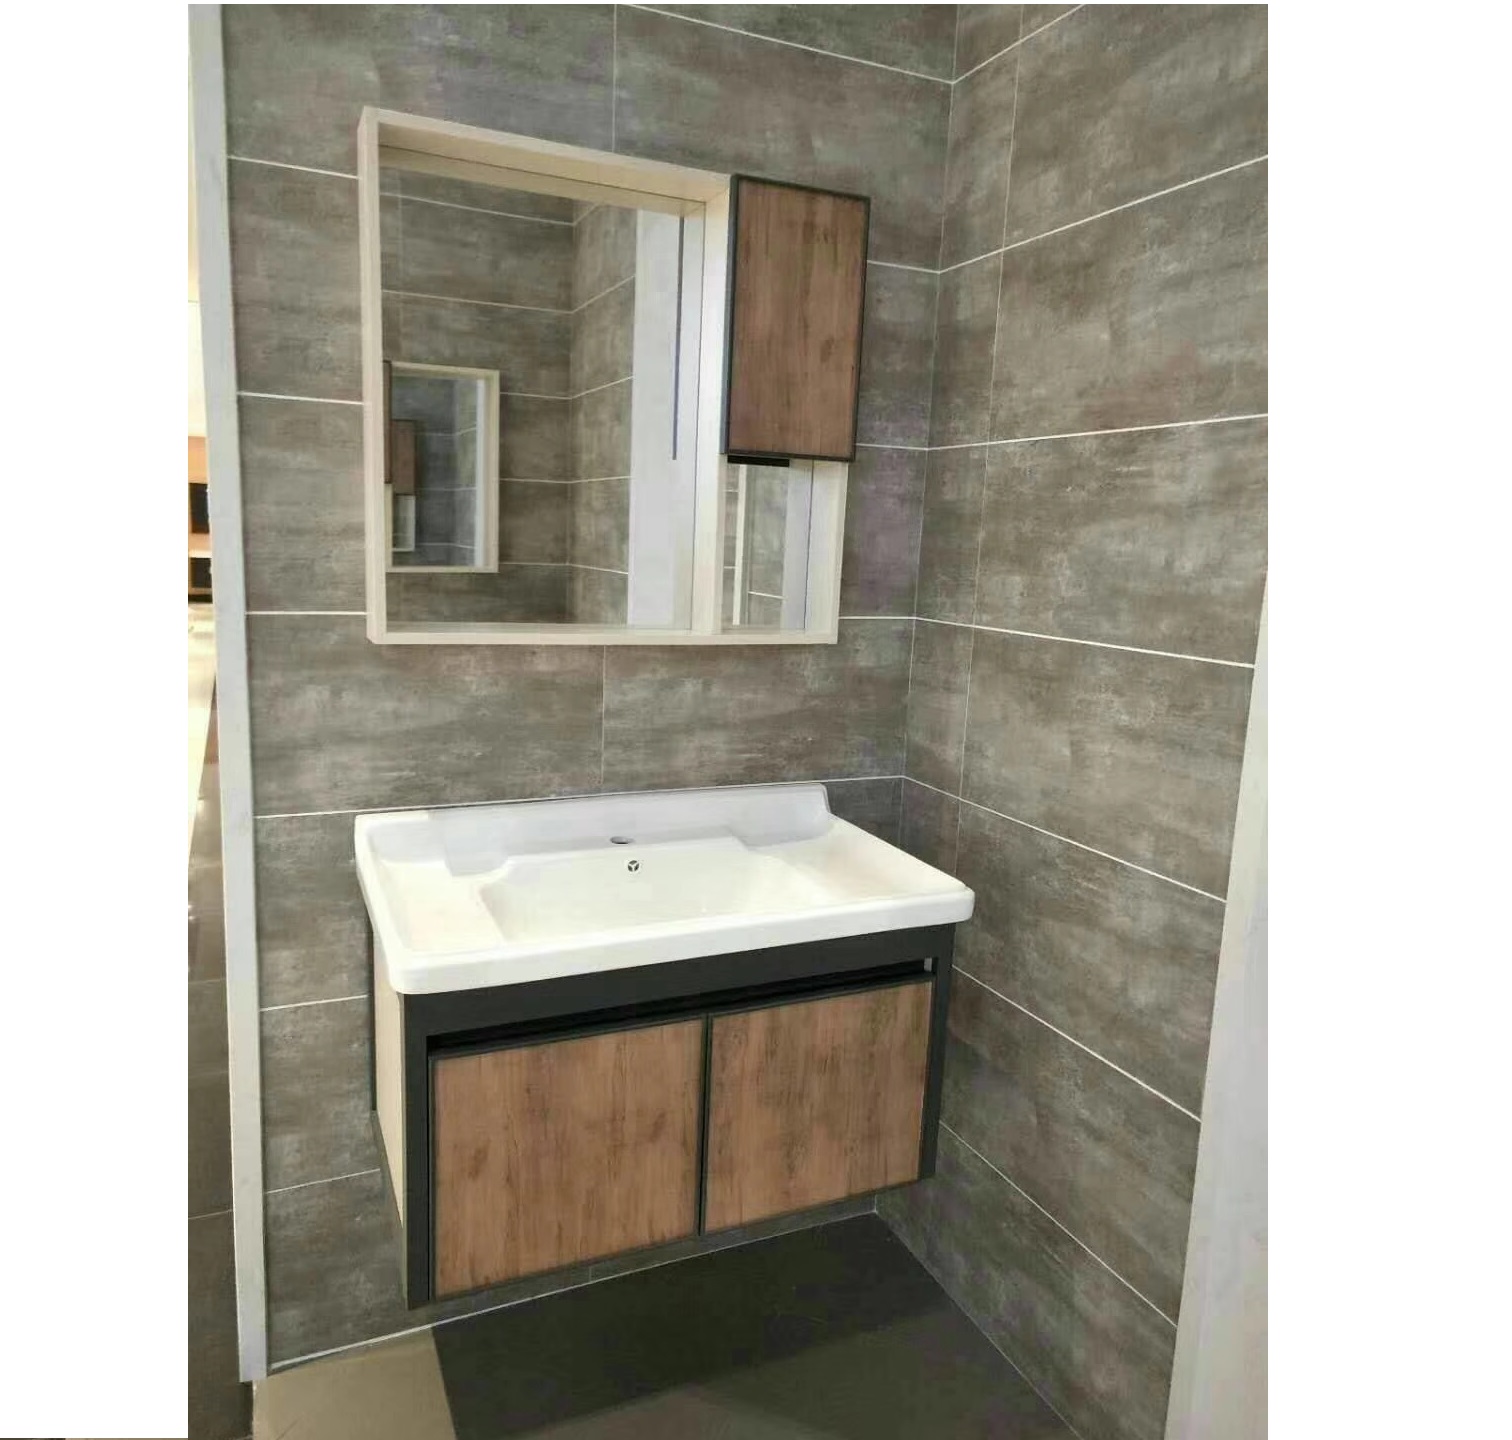 70cm bathroom vanity cabinet with medicine cabinet water-proof